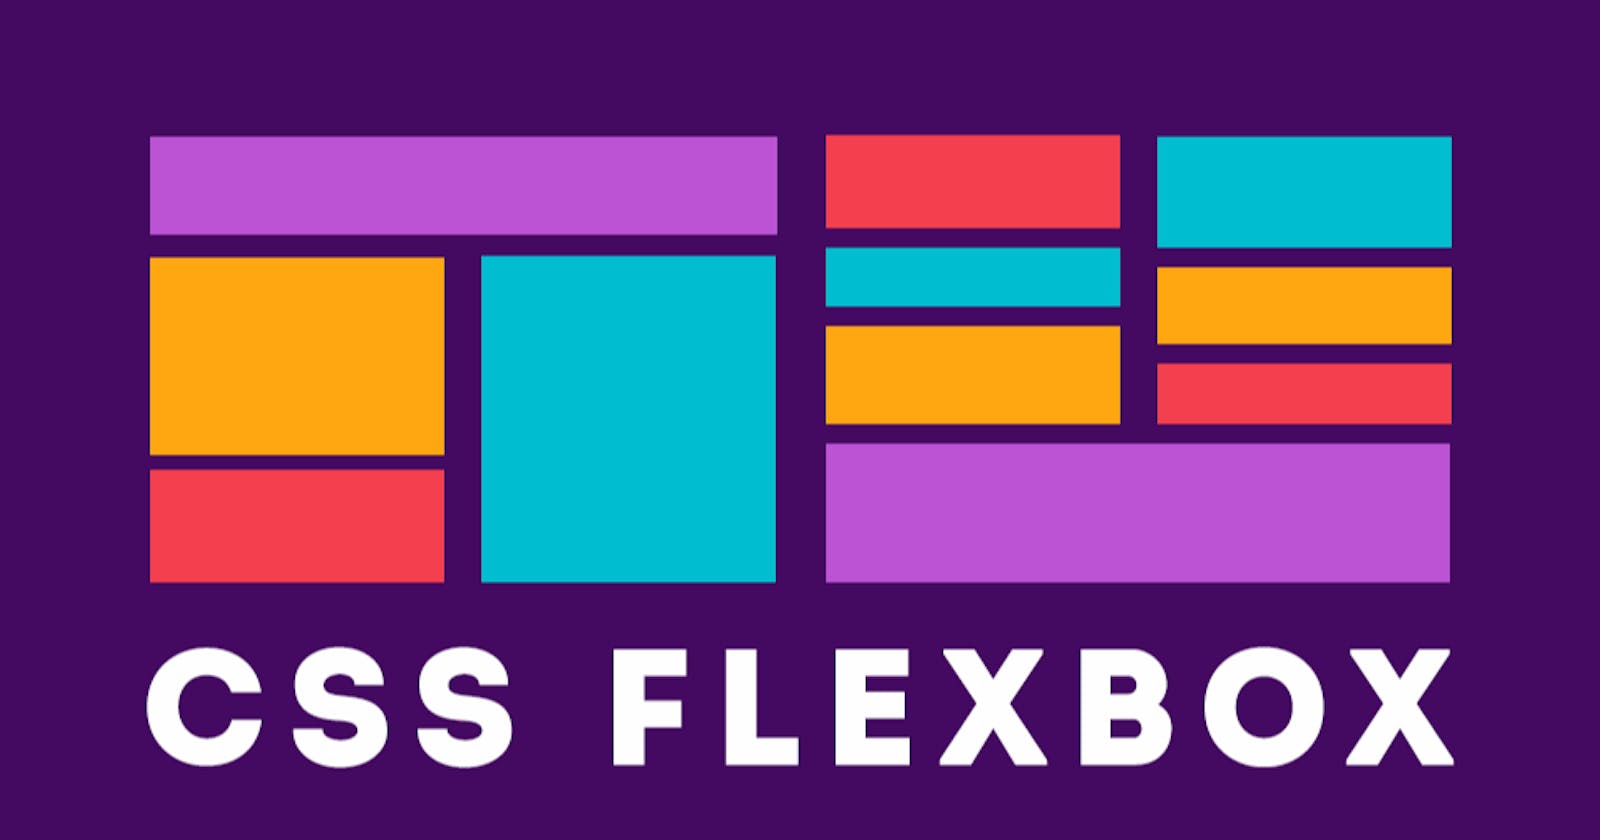 FLEX |Flexbox | In CSS